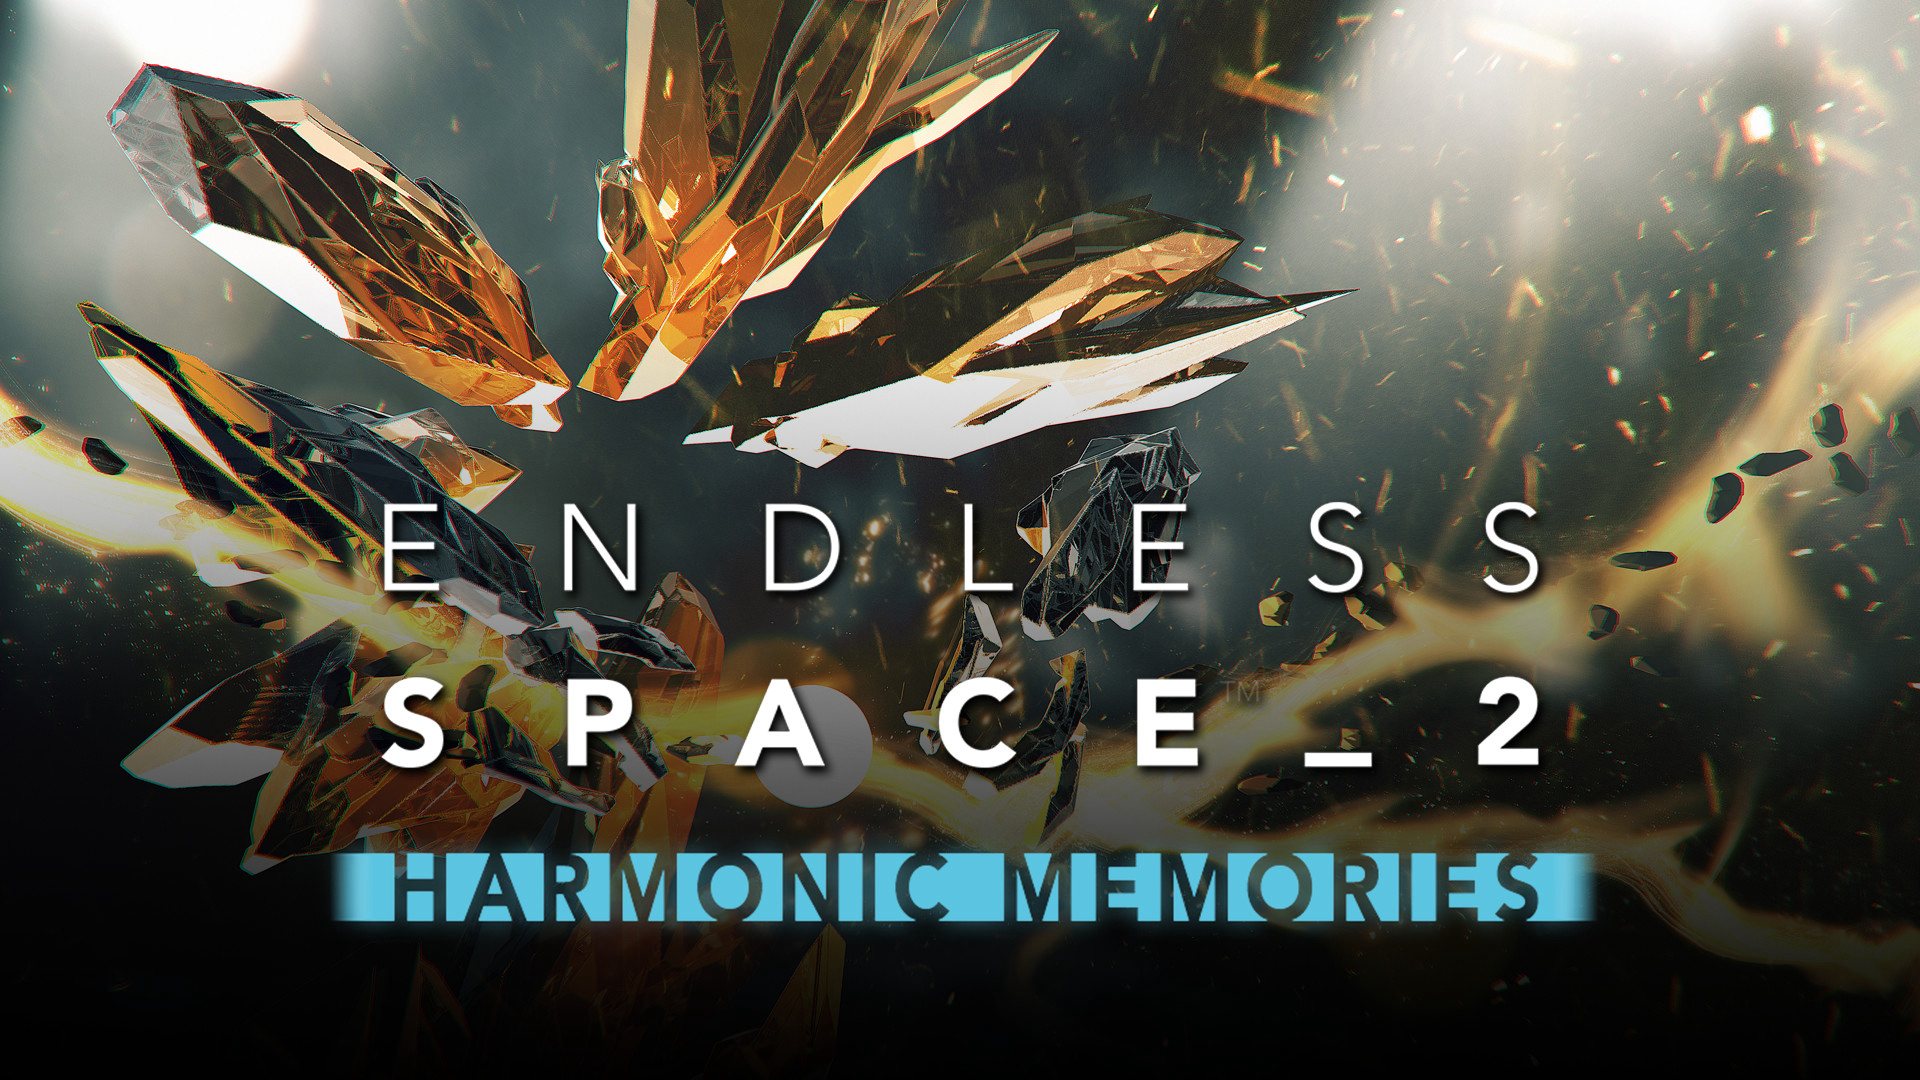 [$ 1.45] Endless Space 2 - Harmonic Memories DLC Steam CD Key